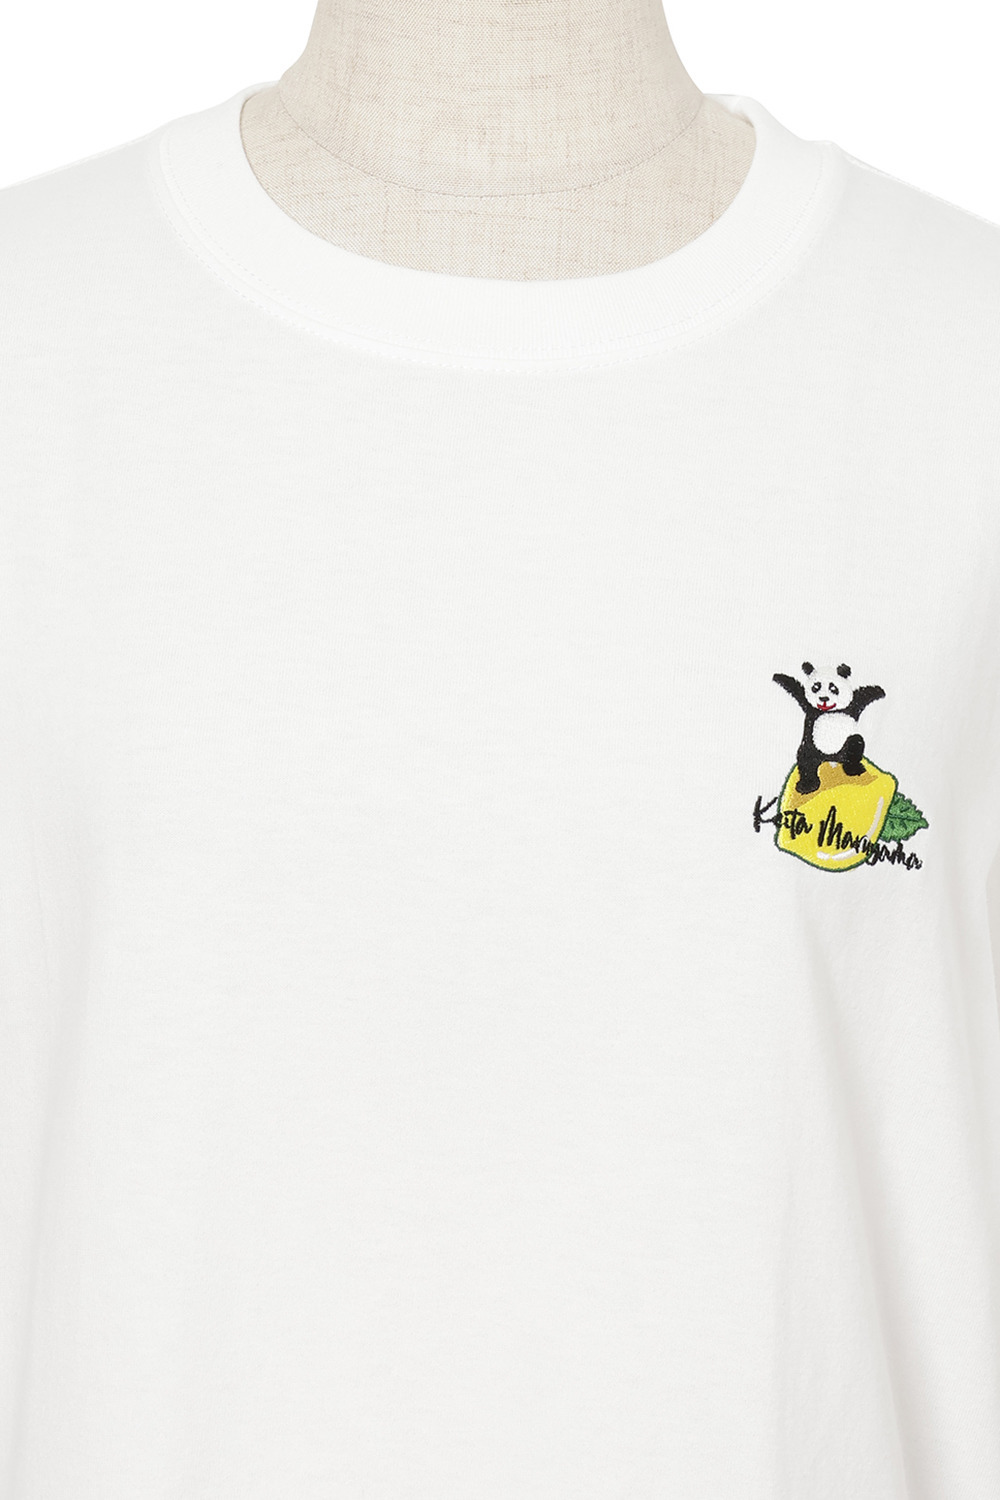 PANDA Embroidery Tシャツ 詳細画像 ホワイト 3